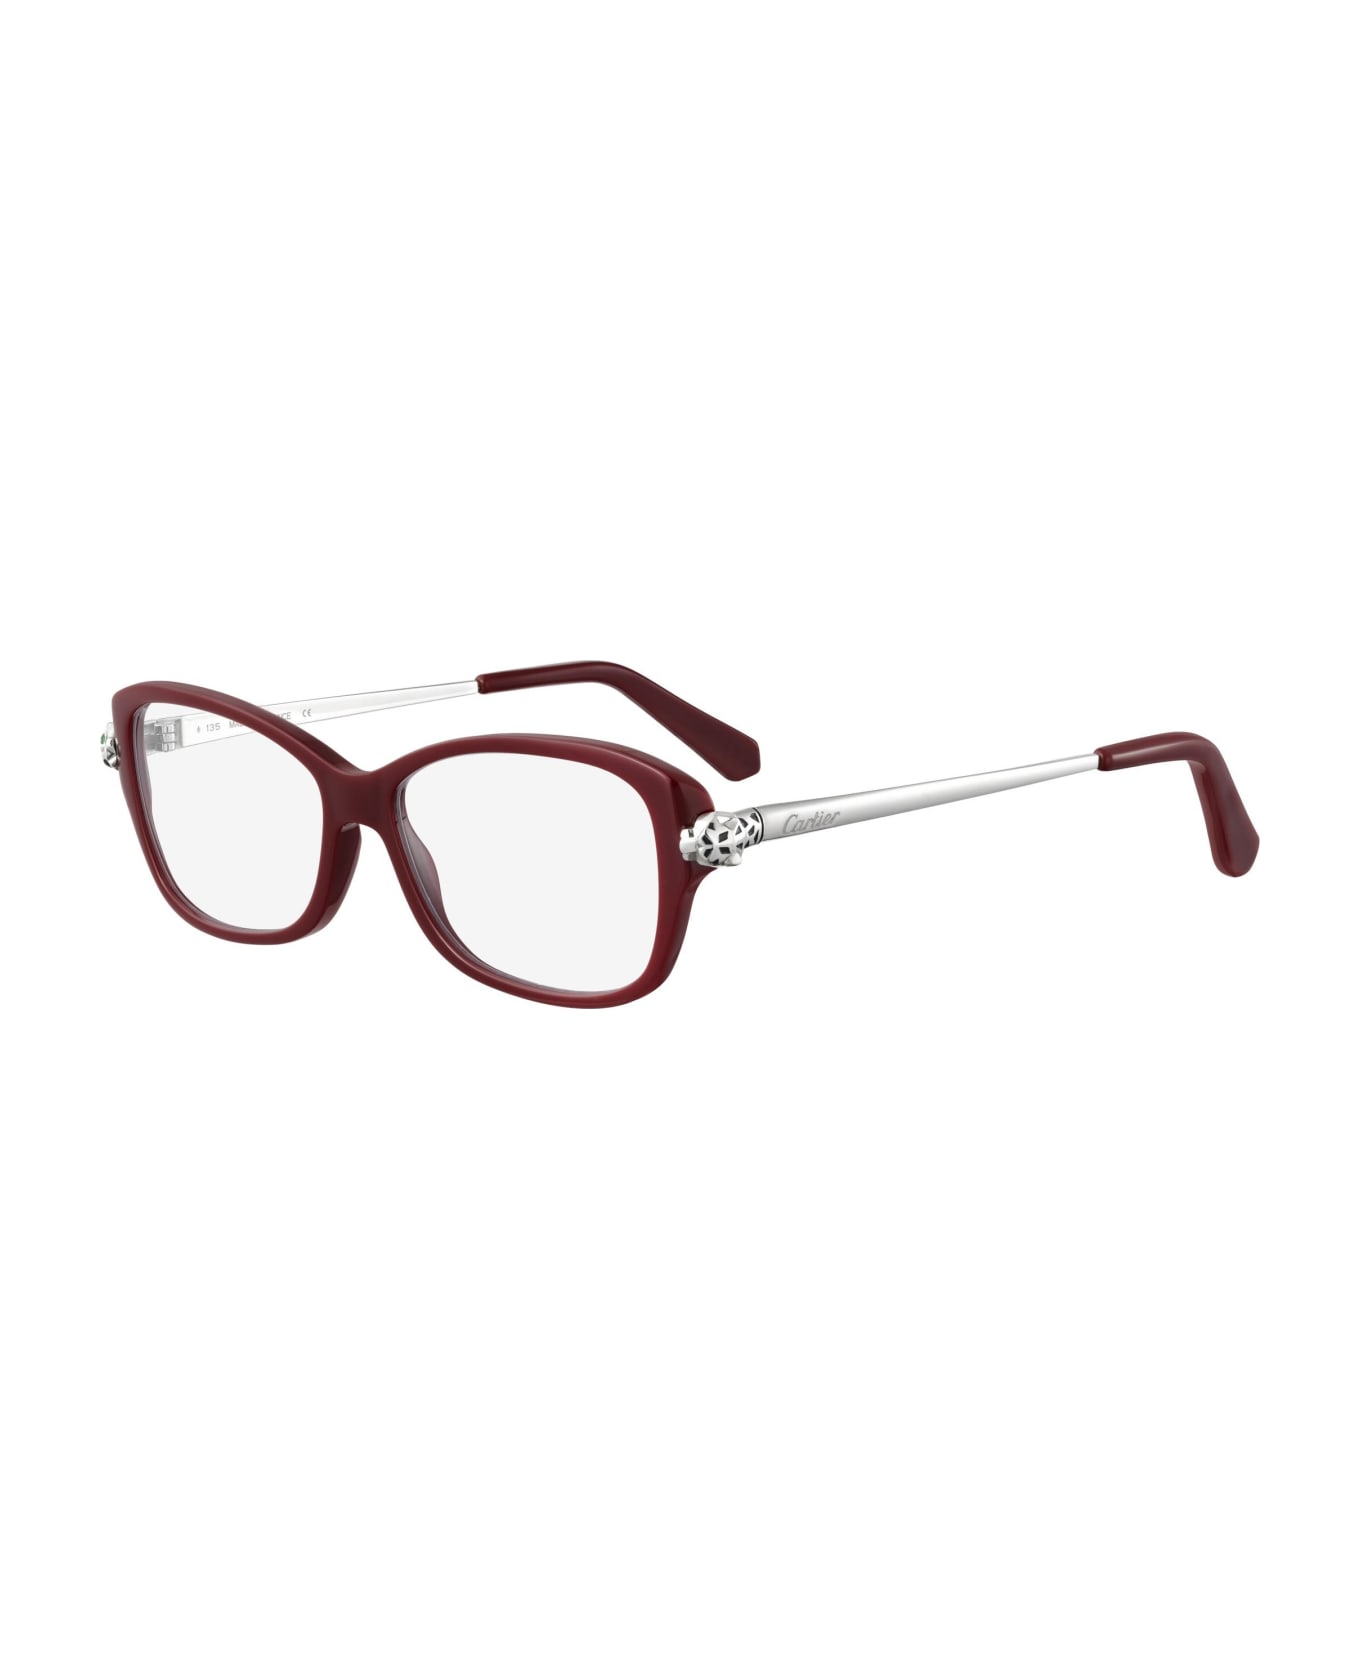 Cartier Eyewear Glasses - Burgundy